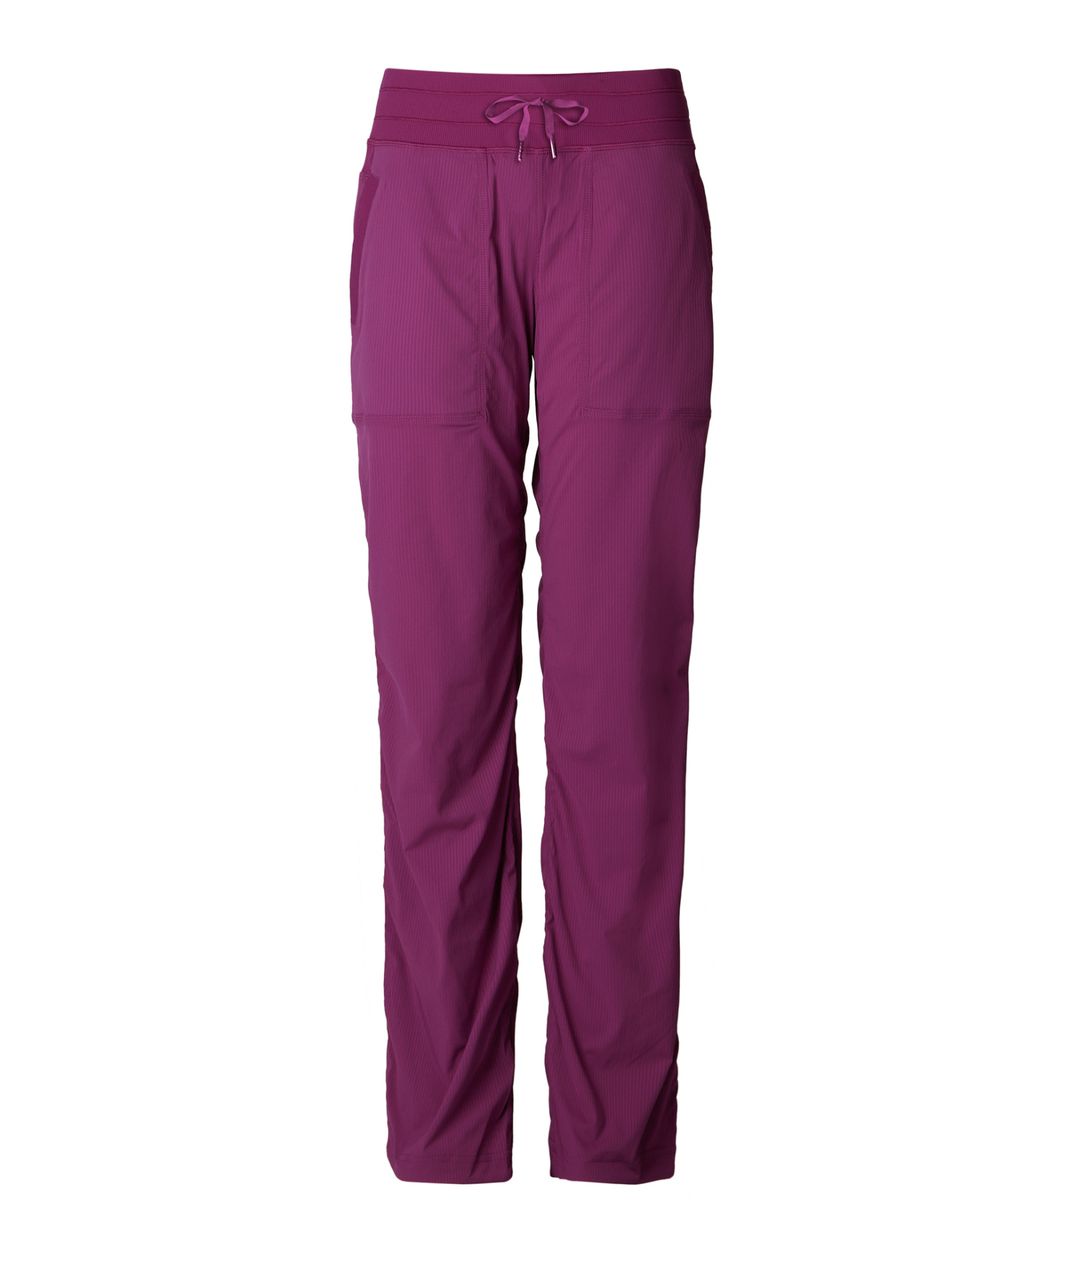 Lululemon Street To Studio Pants Plum Purple Size 4 - $60 (38% Off Retail)  - From Bailey